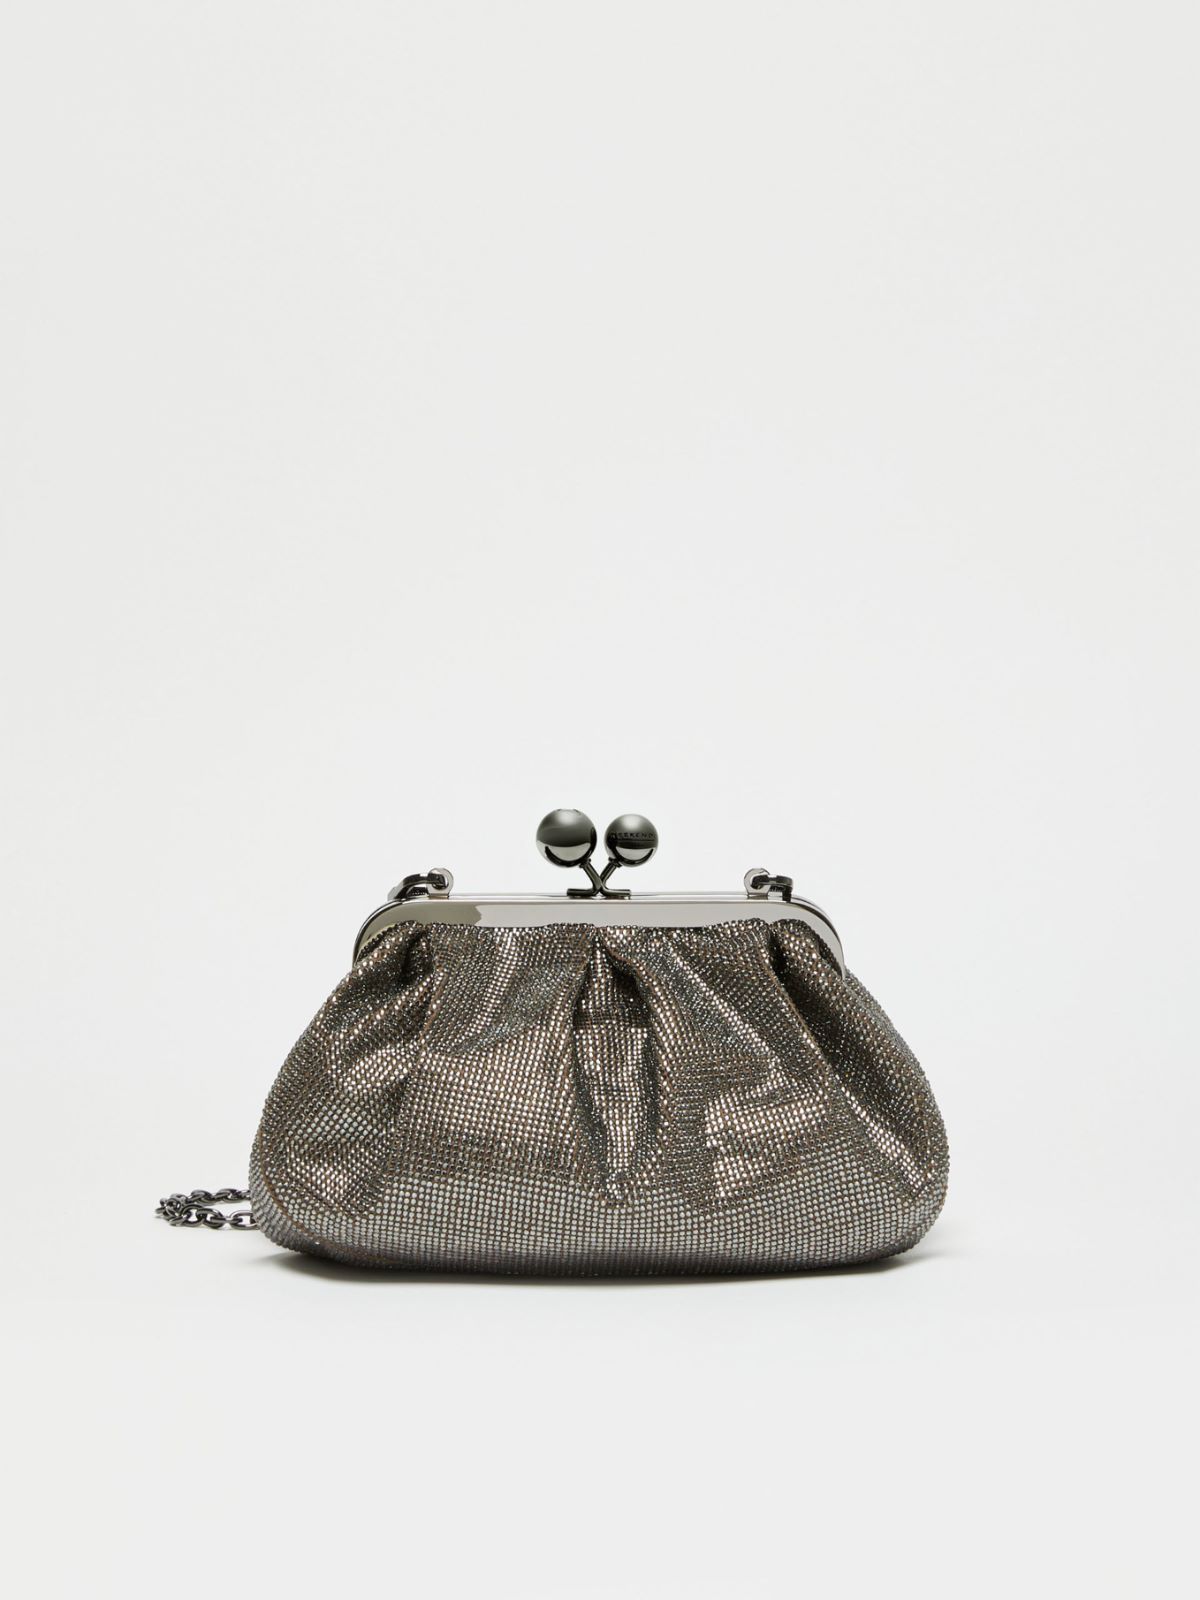 Max Mara | Bags, Fashion bags, Street style bags